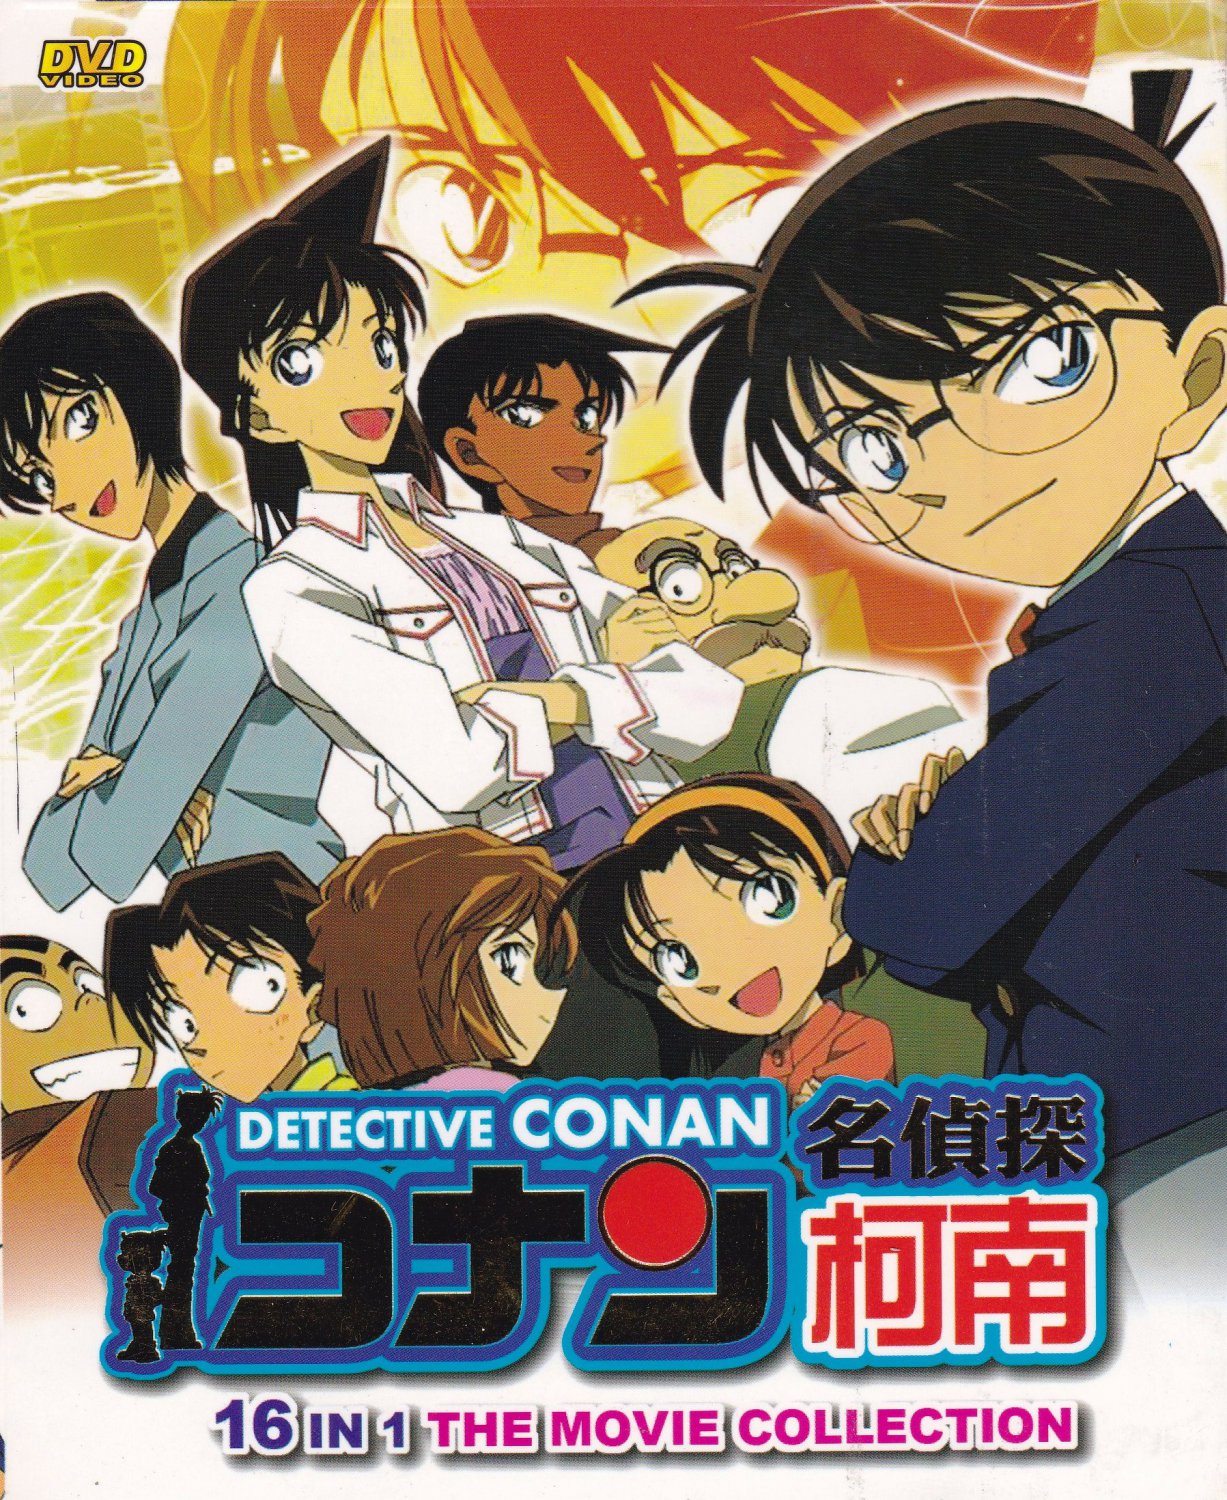 Detective conan anime sub